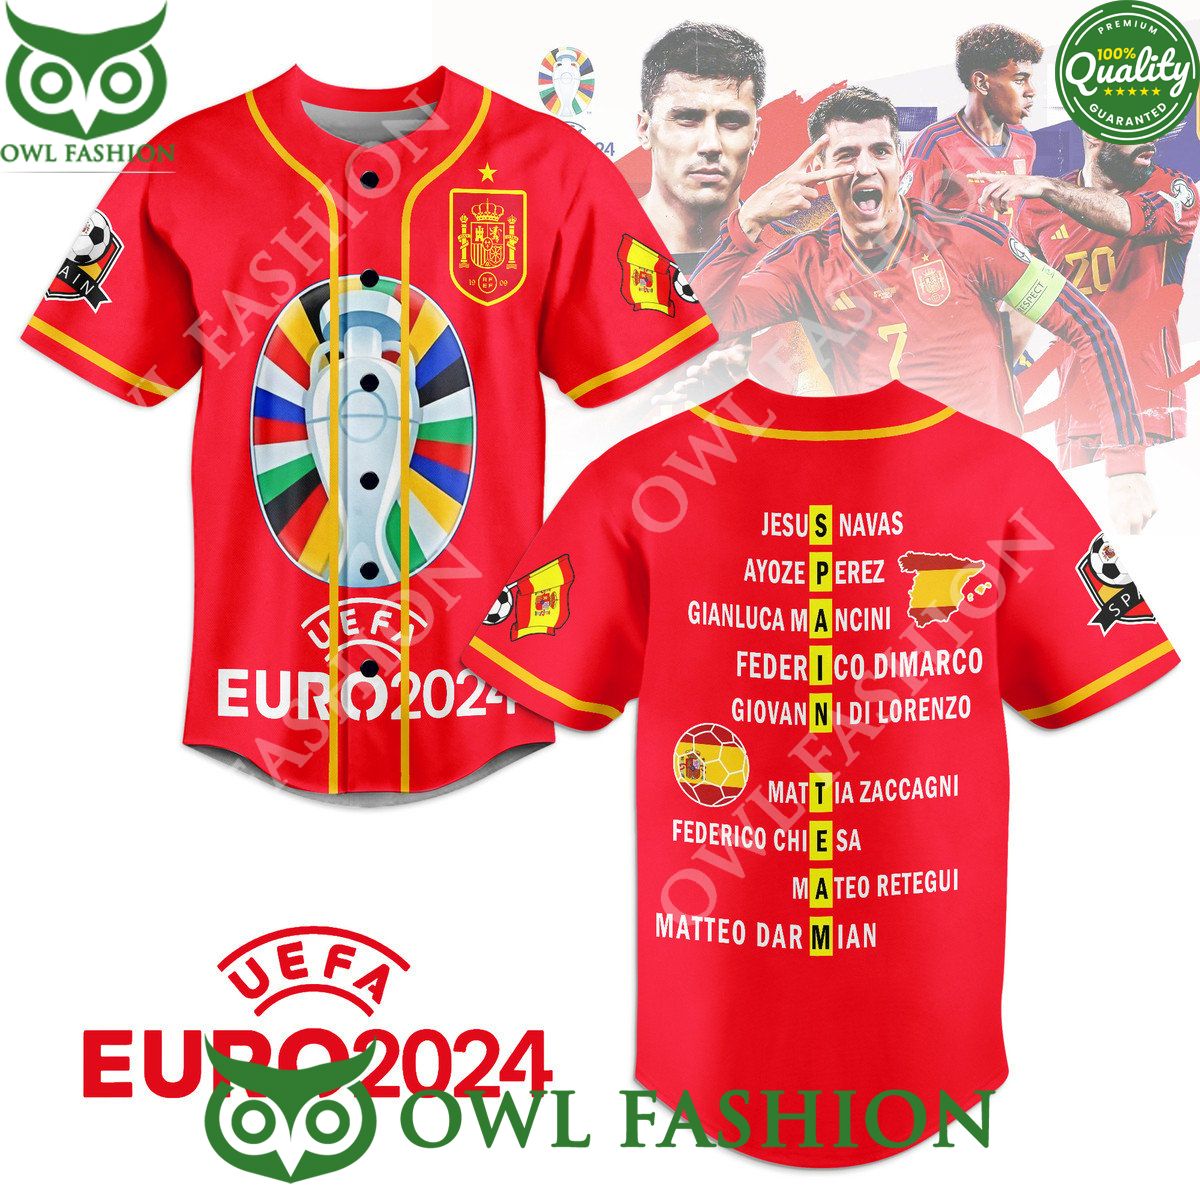 Spain UEFA Euro 2024 Champion Red baseball jersey shirt